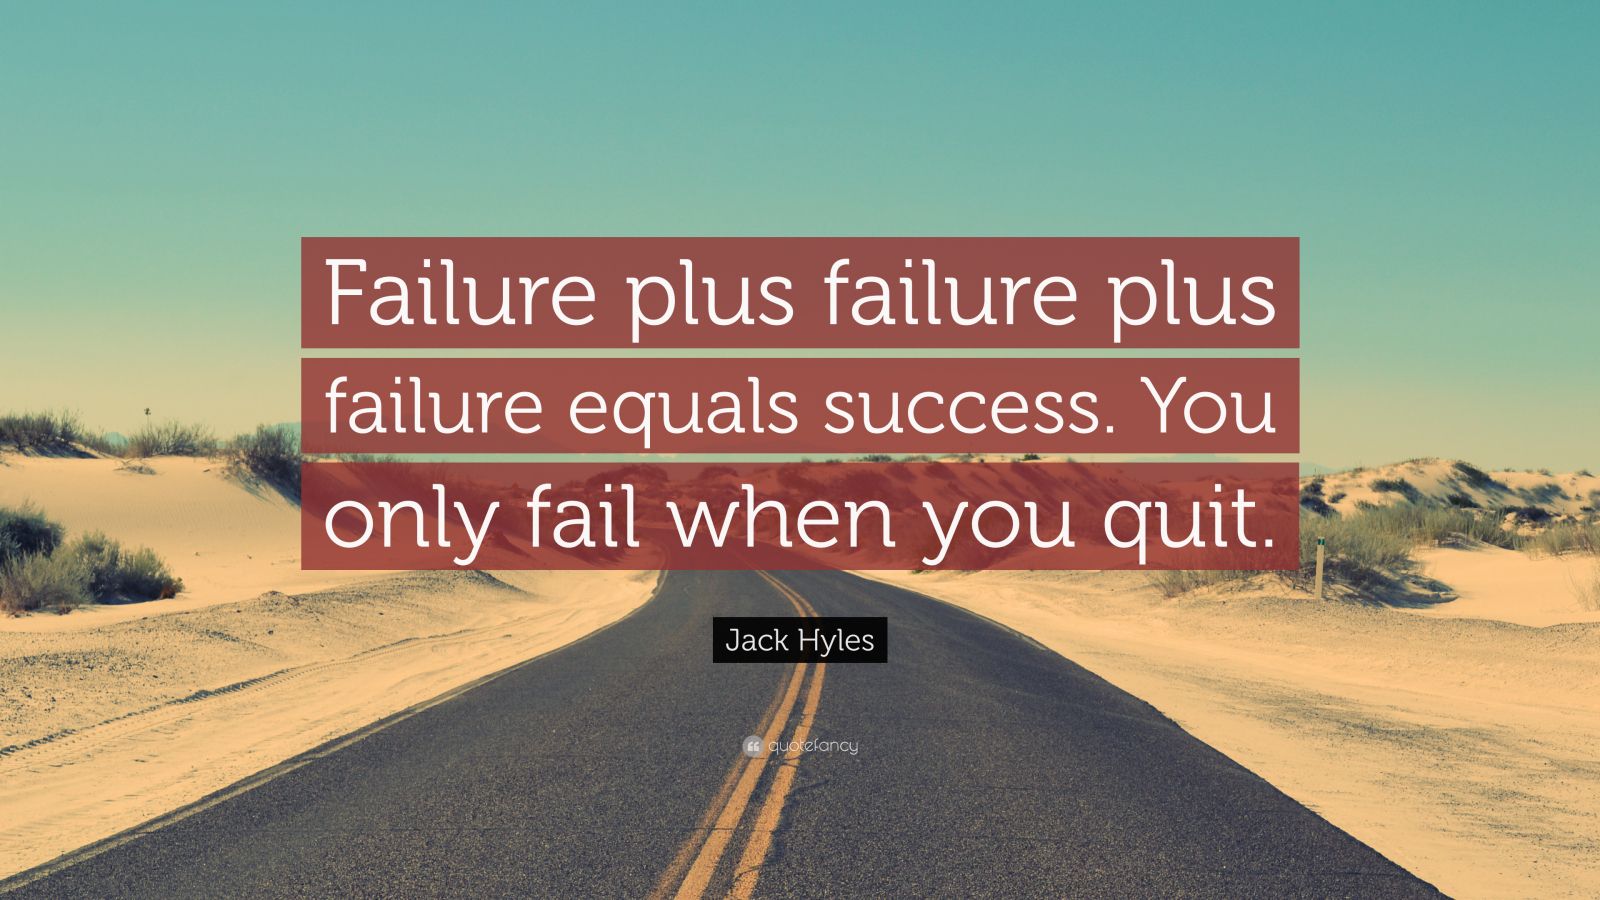 Jack Hyles Quote “failure Plus Failure Plus Failure Equals Success